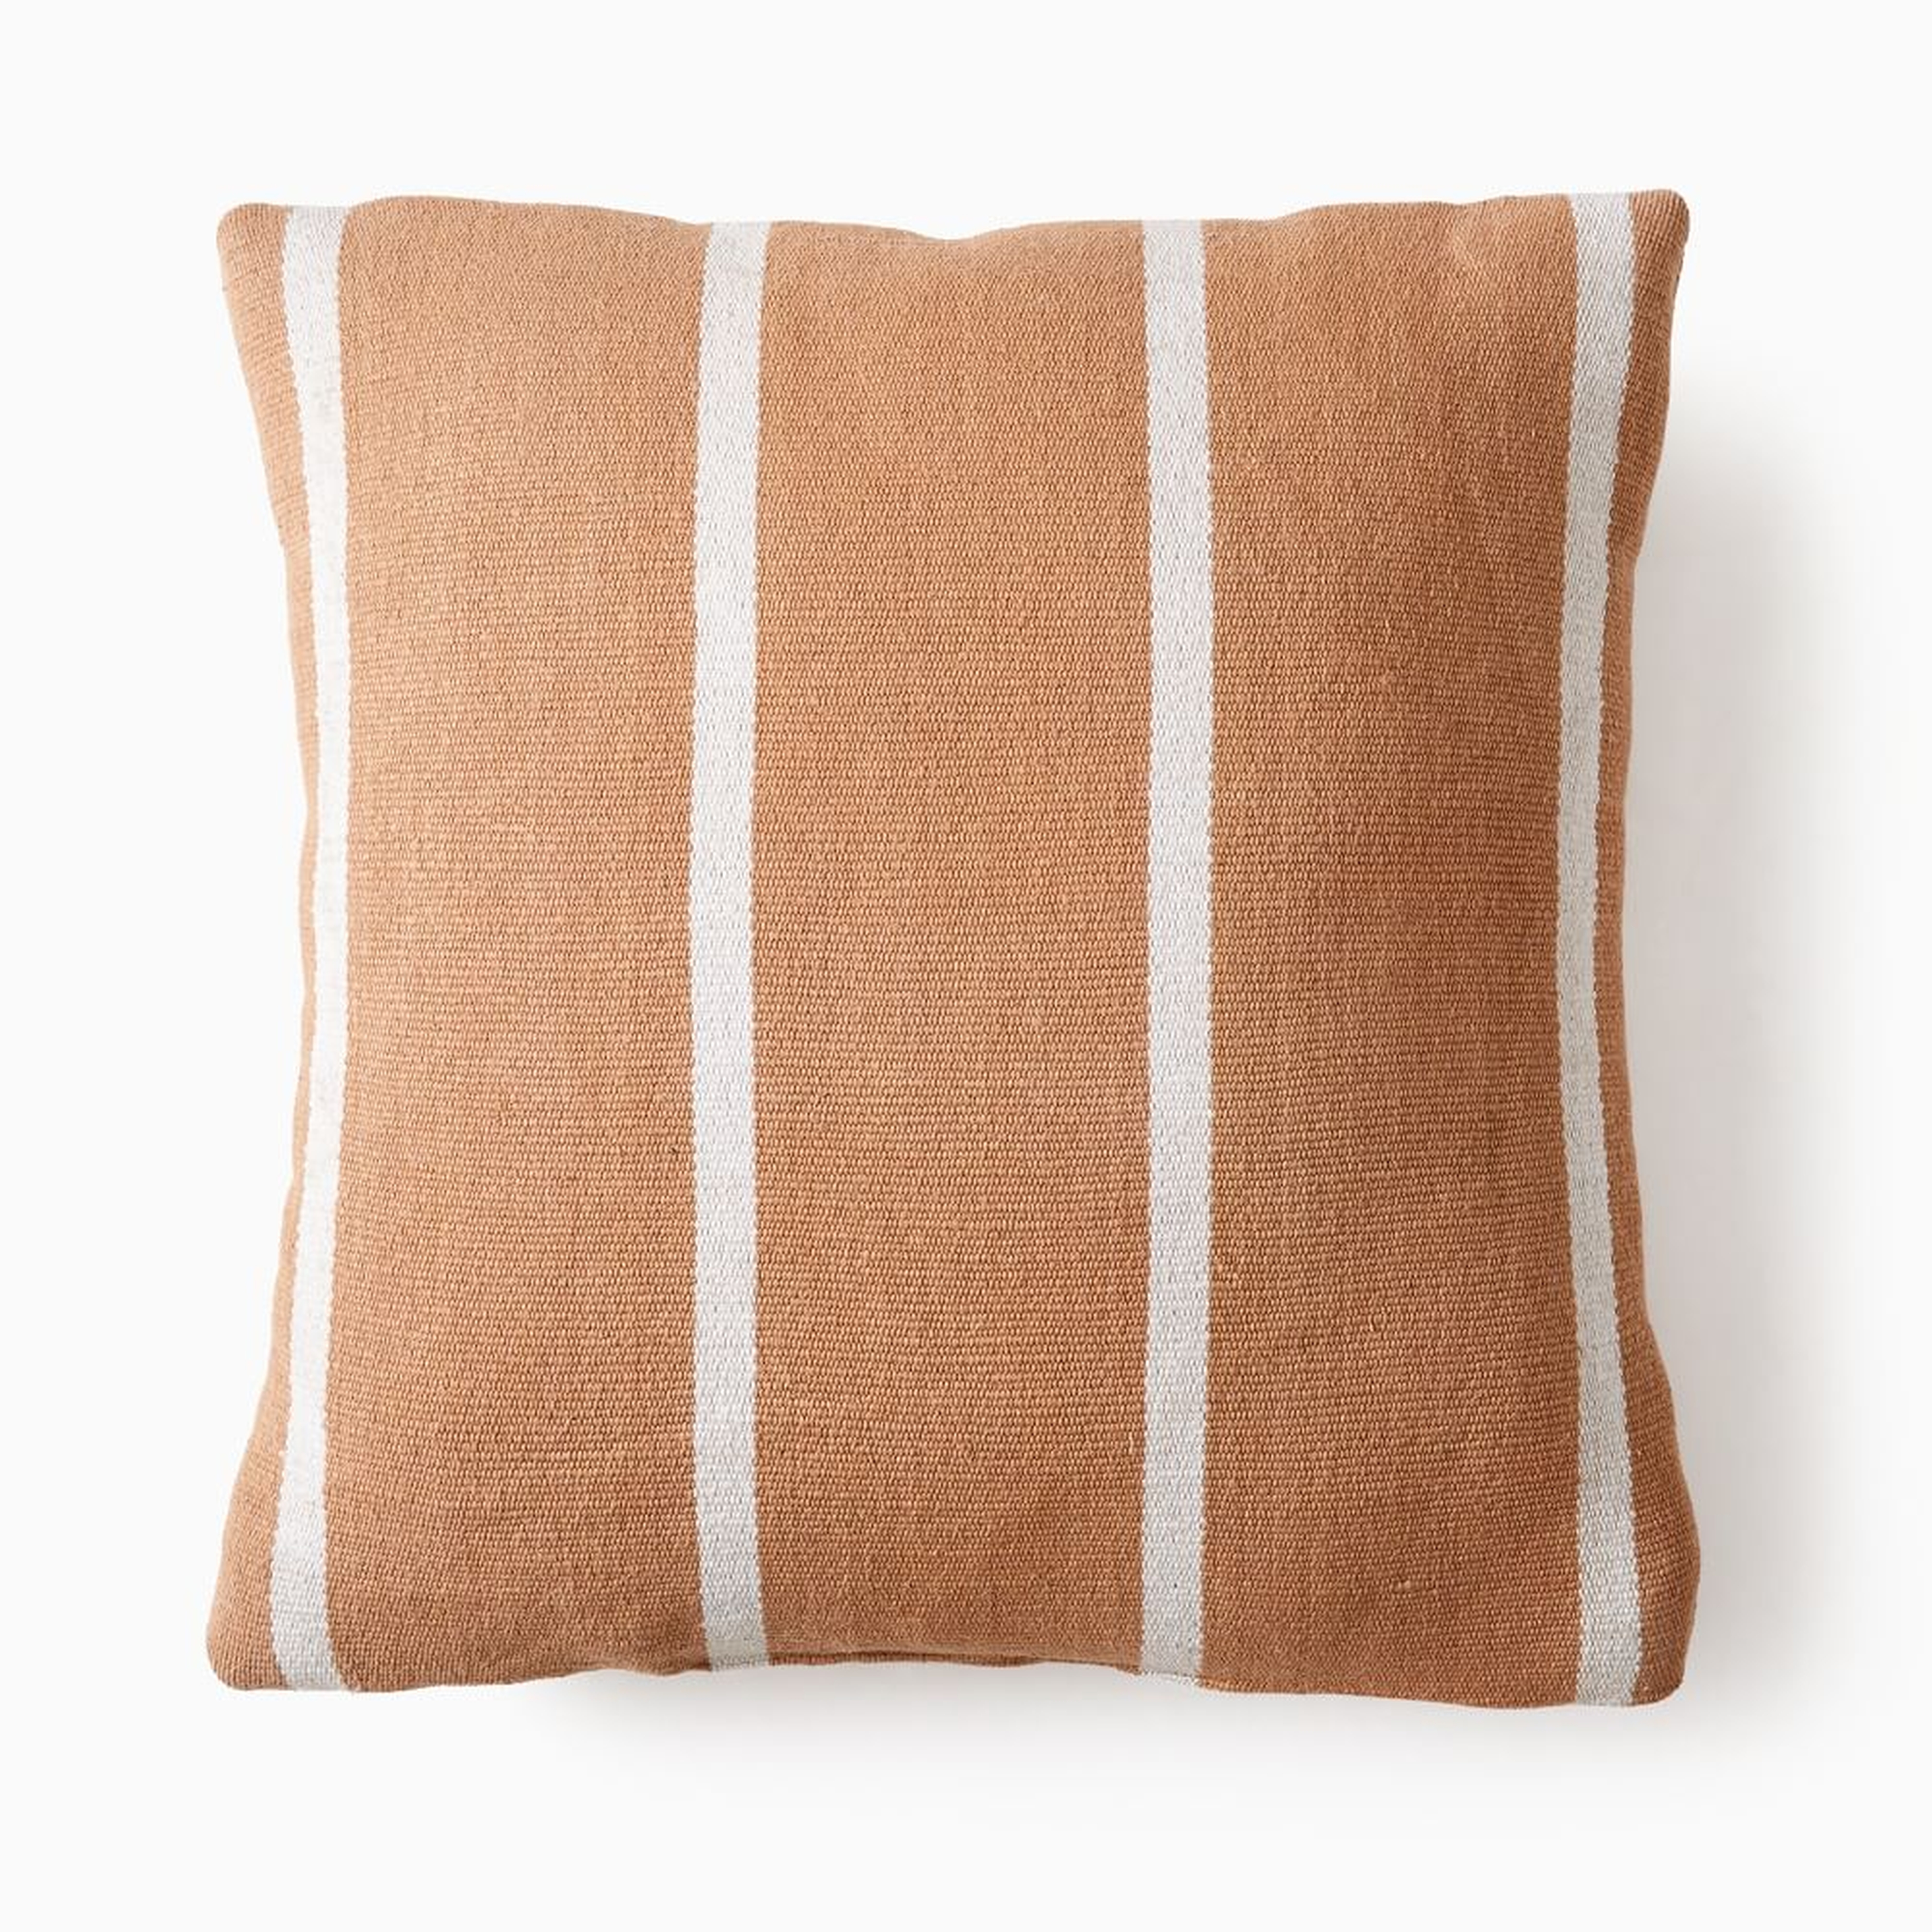 Outdoor Simple Stripe Pillow, 20"x20", Camel - West Elm